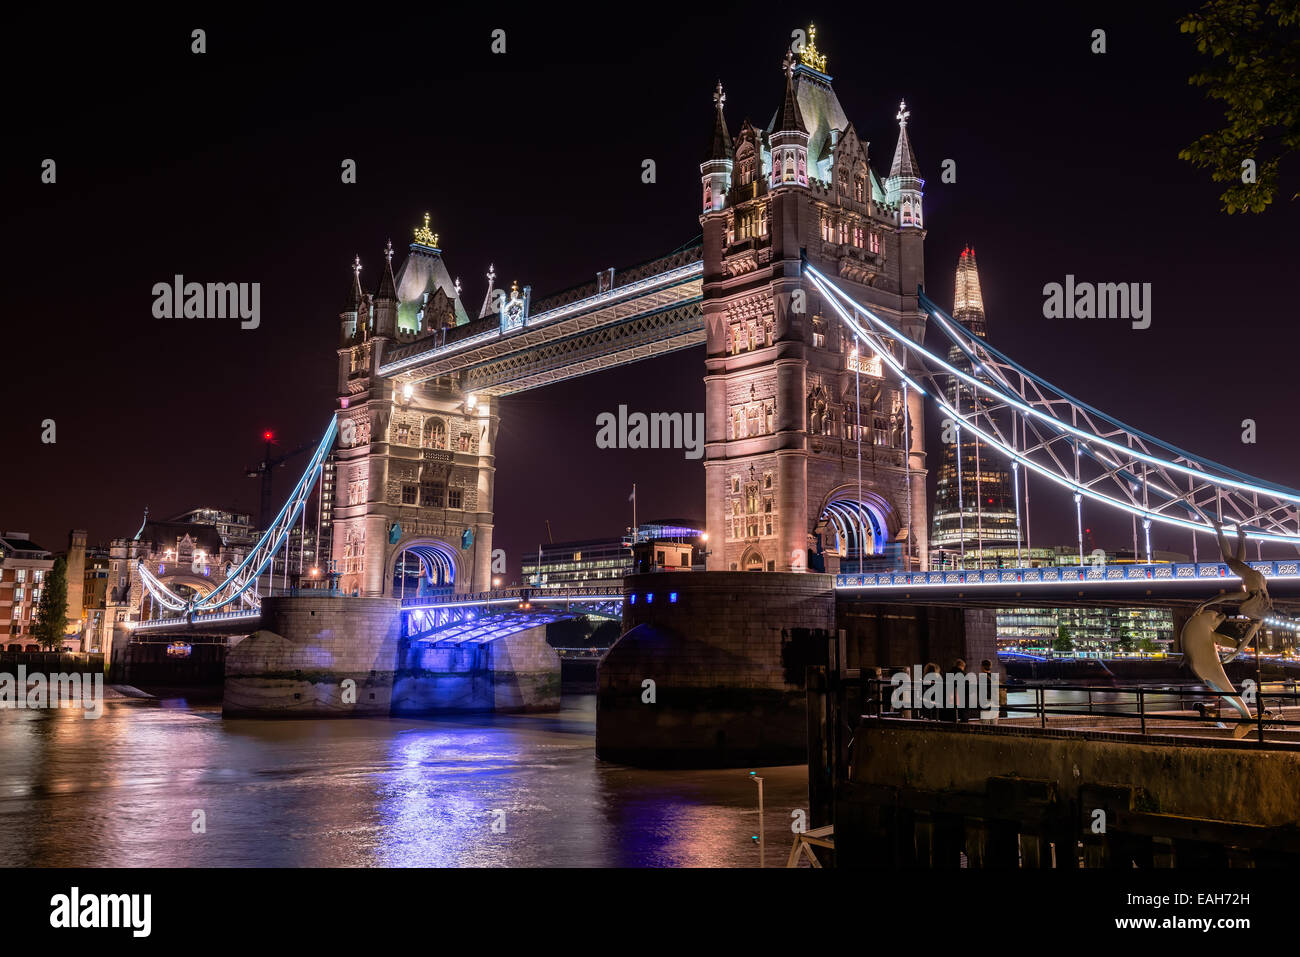 illuminated Tower Bridge at night, seen from northbank - London, UK Stock Photo